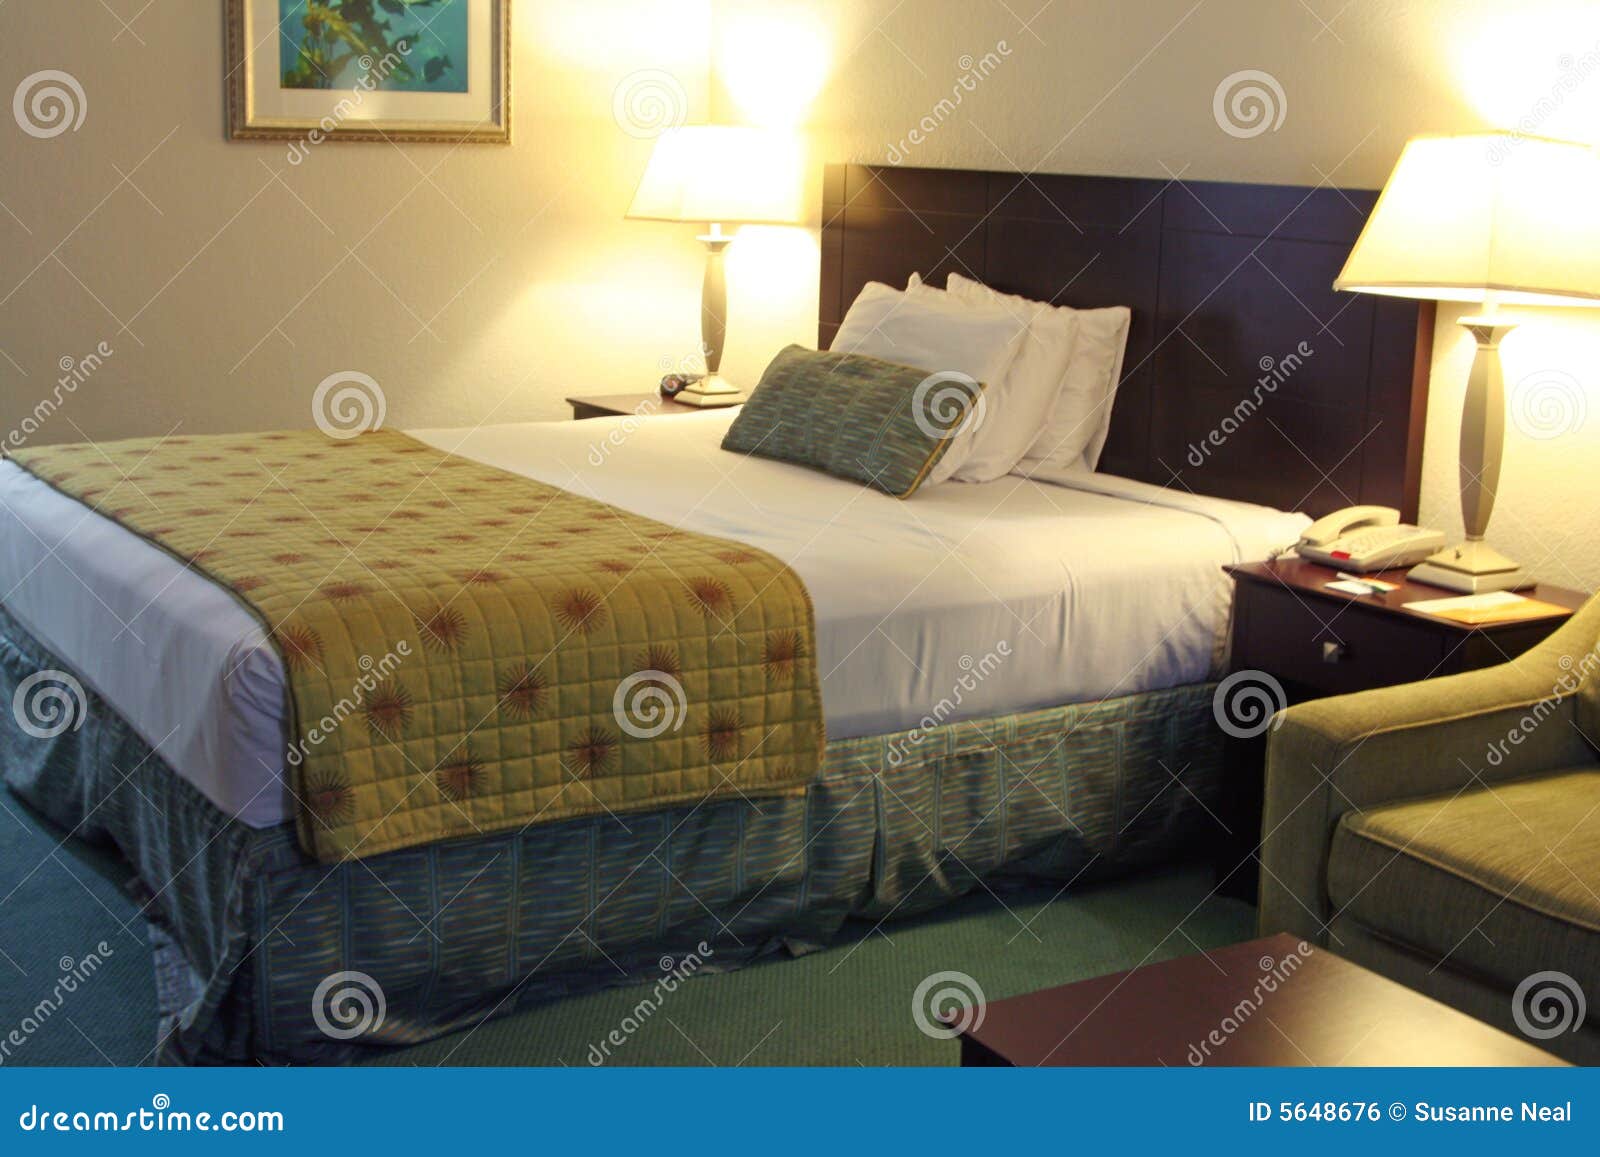 upscale hotel room